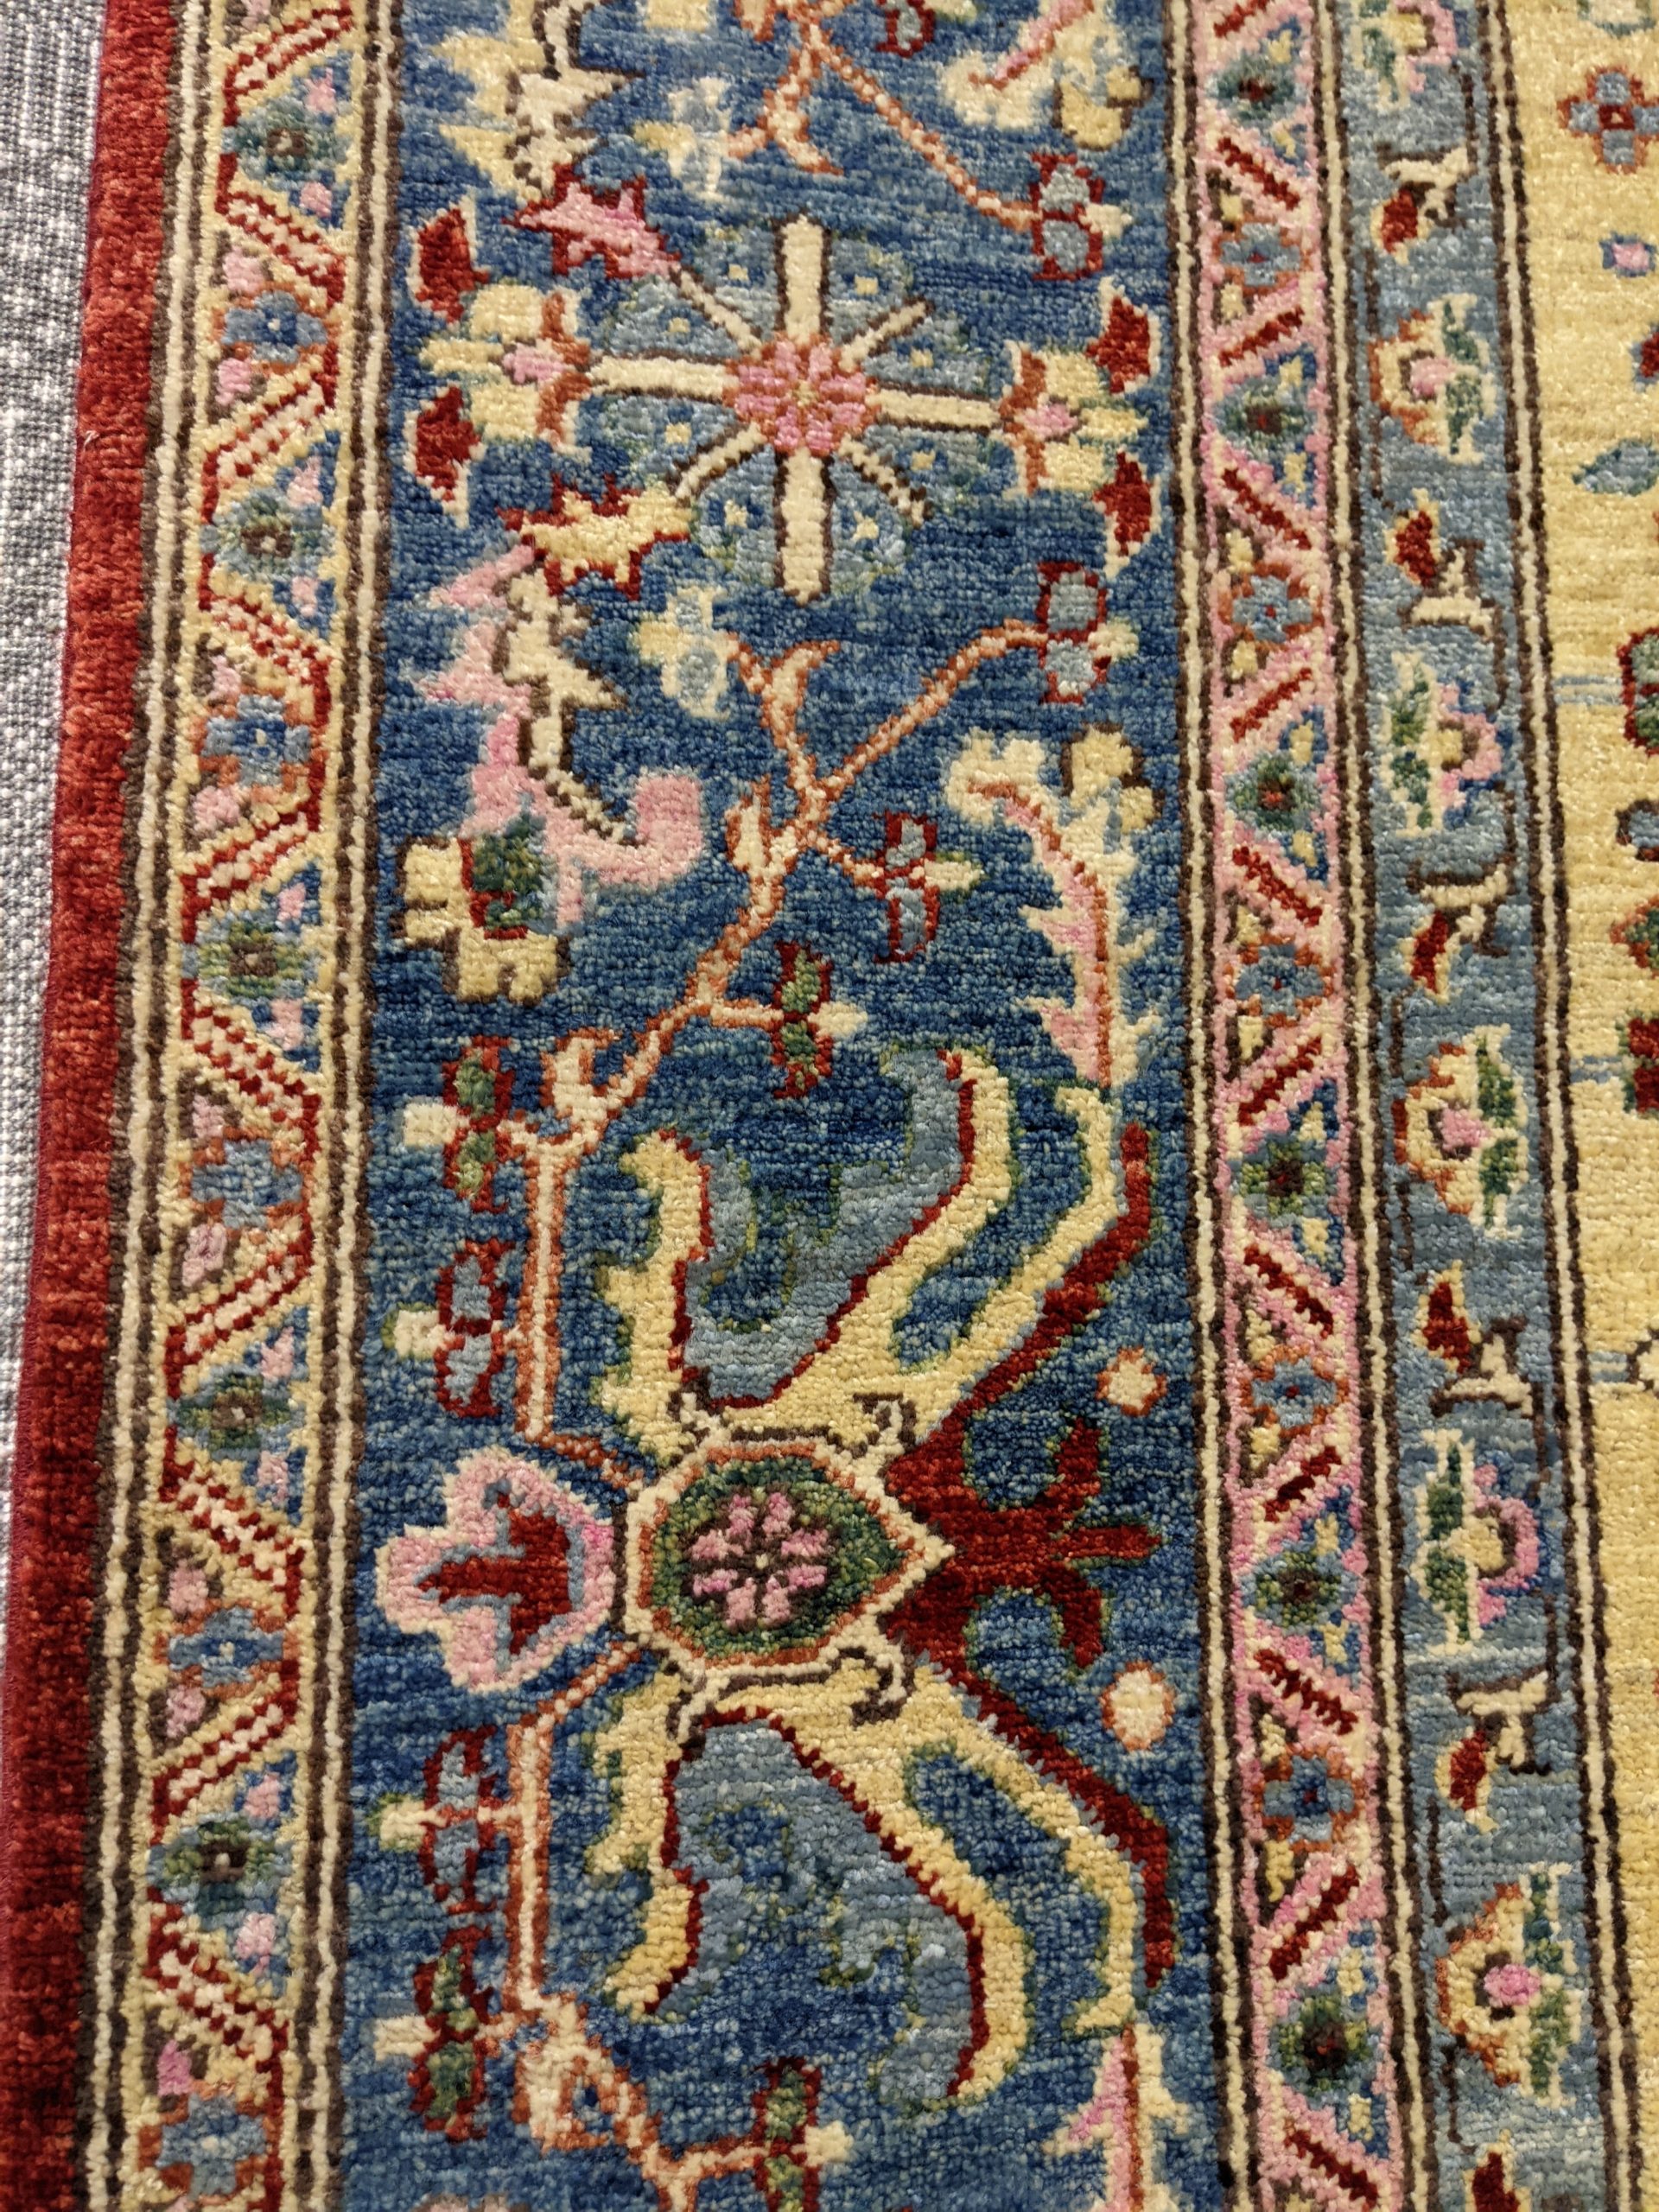 Serapi-style Afghani Rug